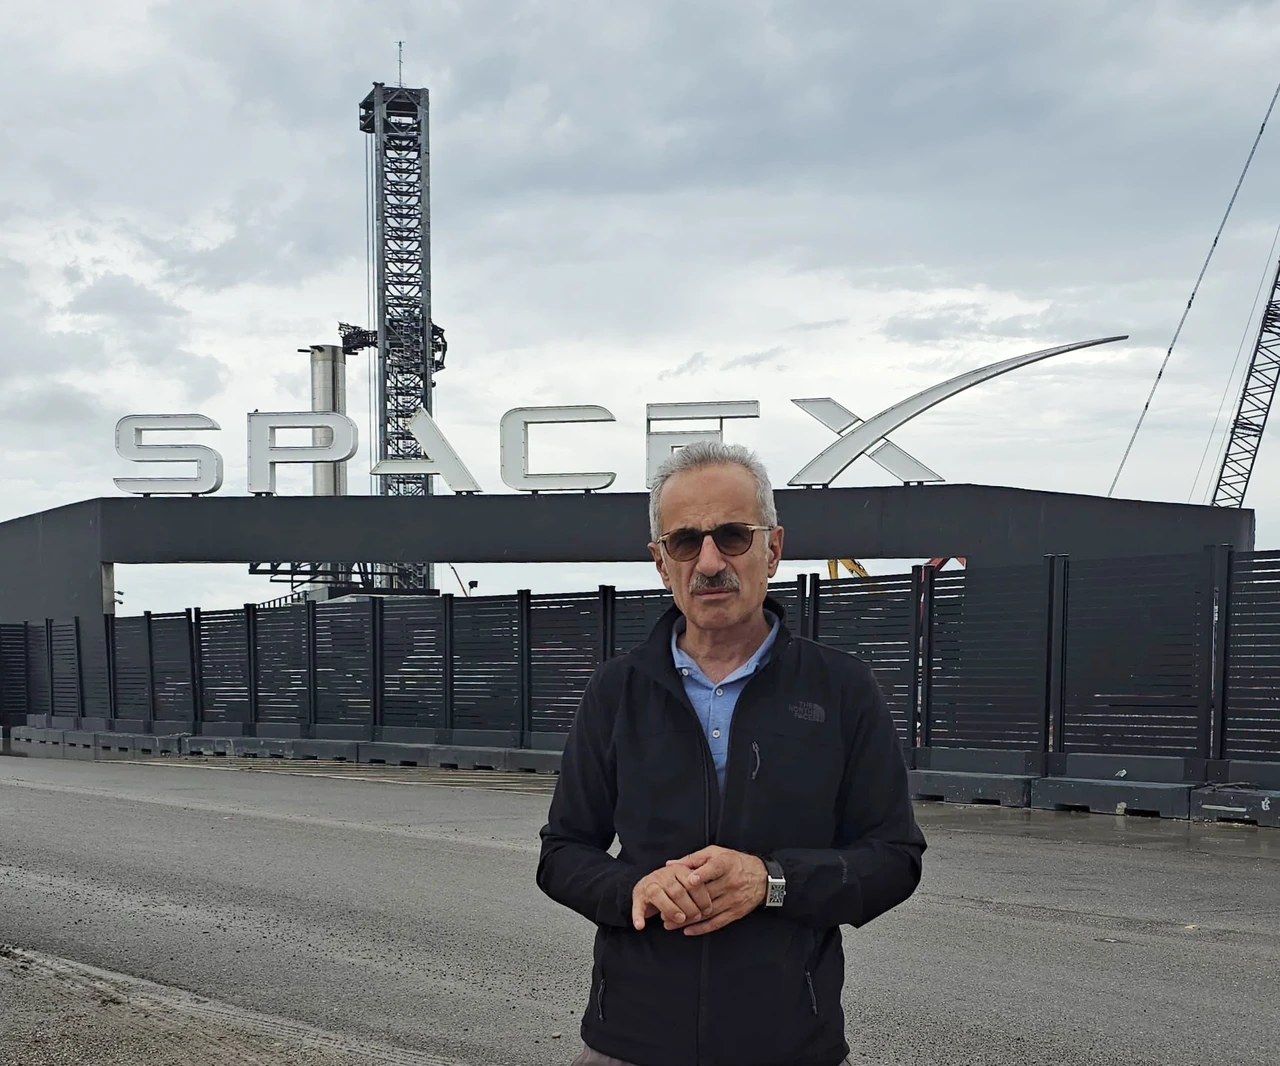 Minister Uraloglu at SpaceX, eyes enhanced satellite launch after Türksat 6A success